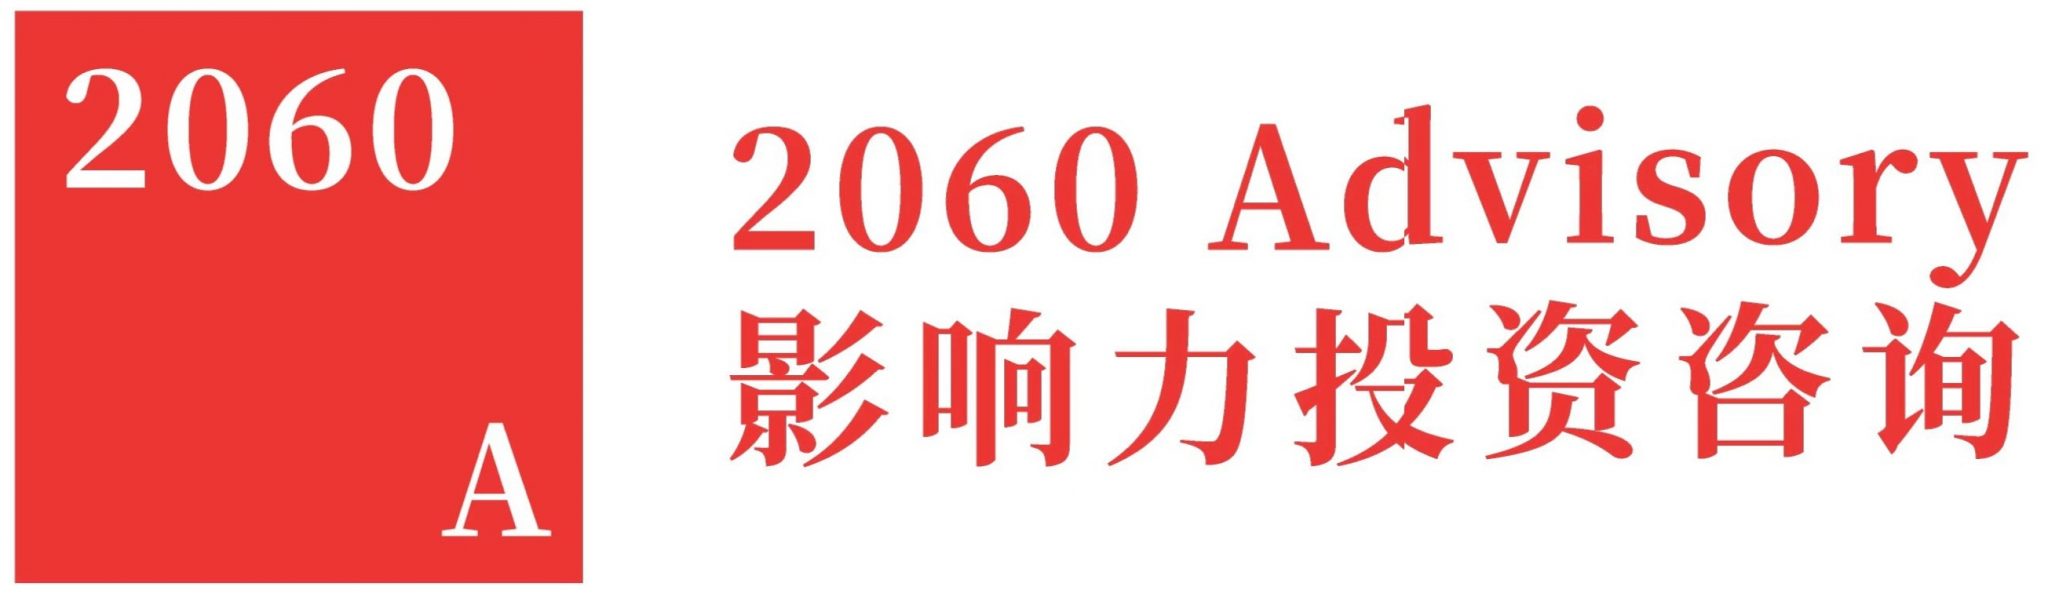 2060-Advisory